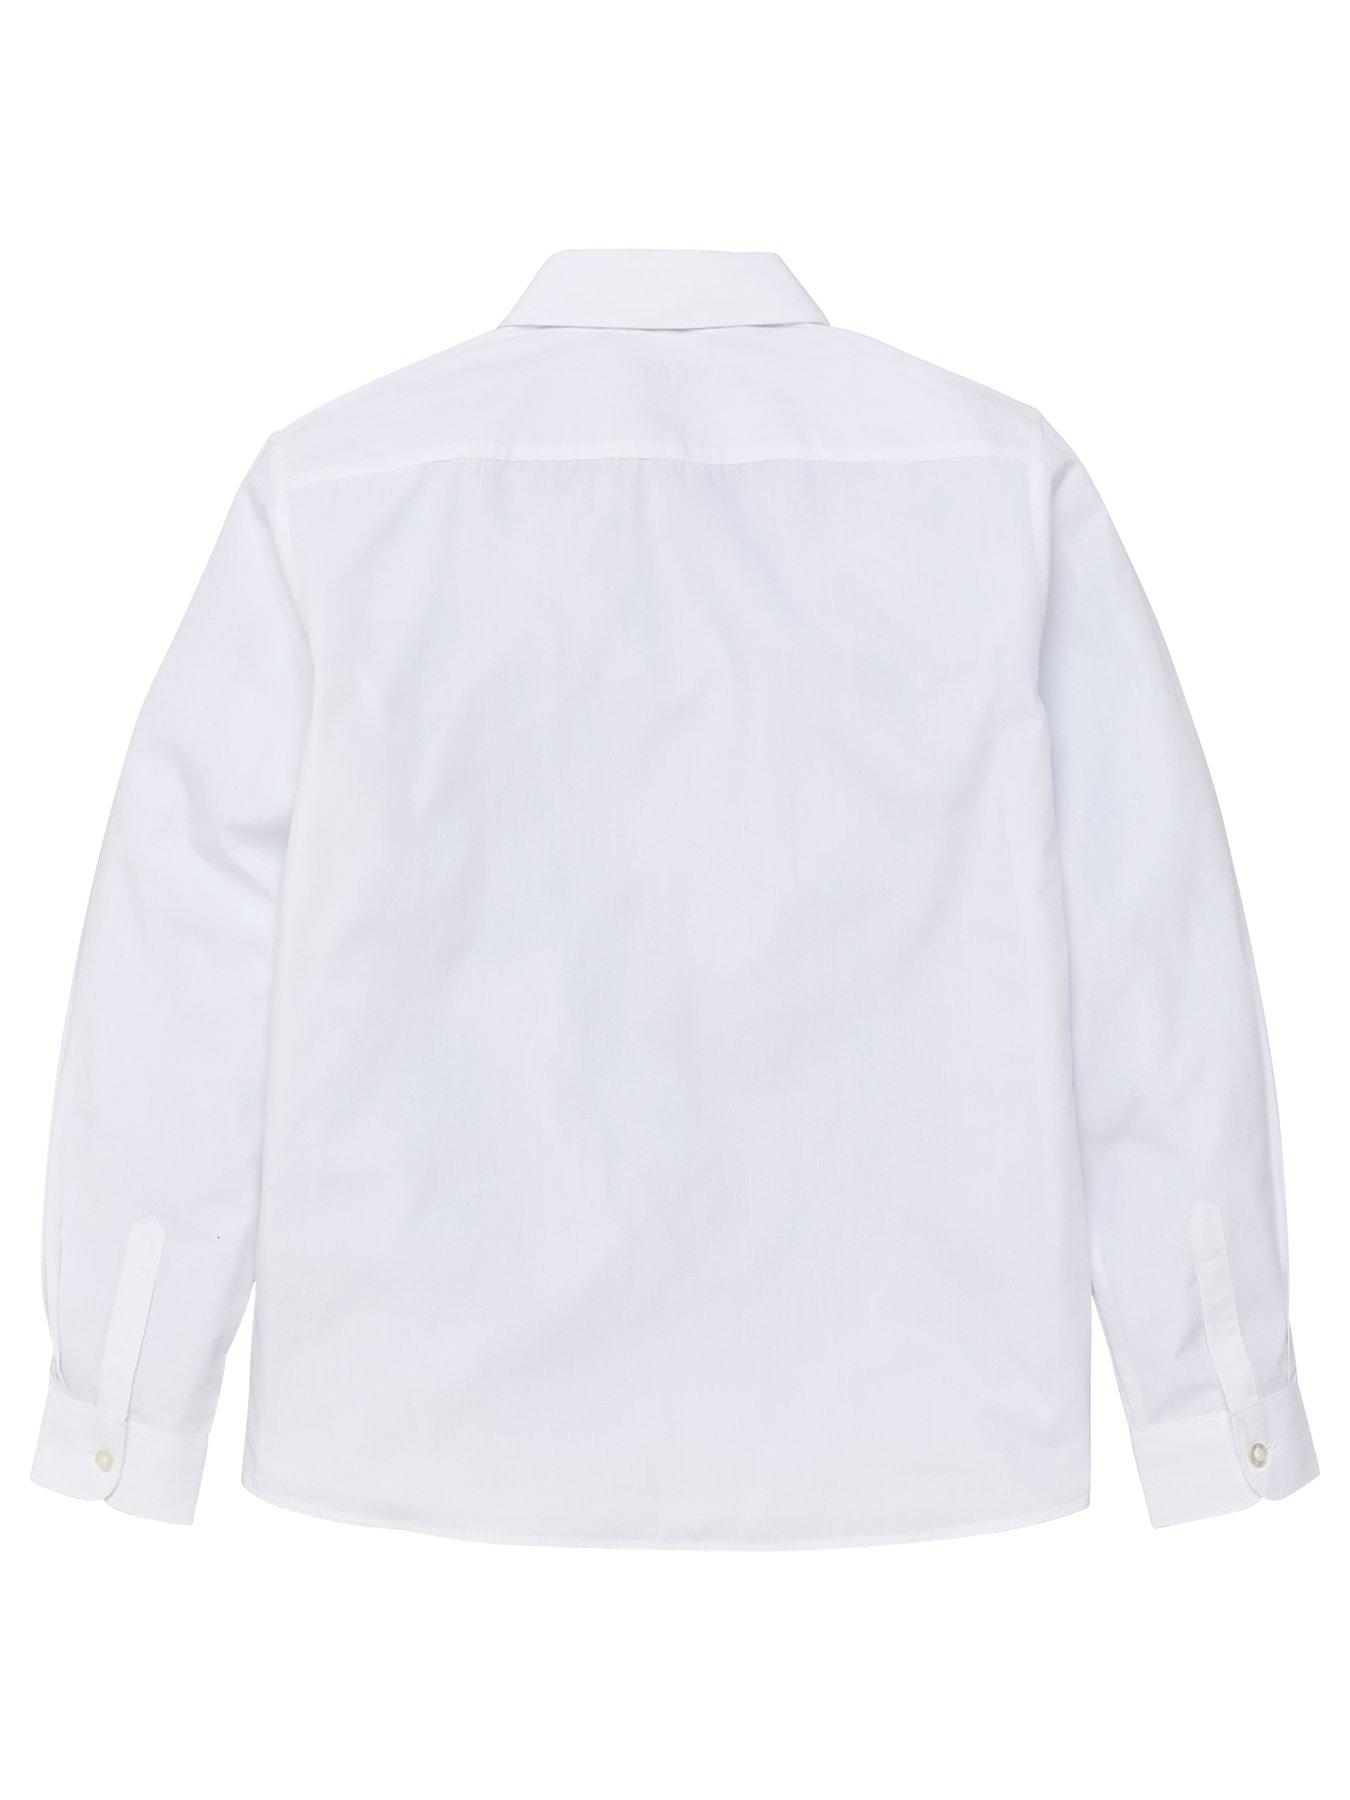 Everyday Boys 3 Pack Long Sleeve Shirts - White | very.co.uk